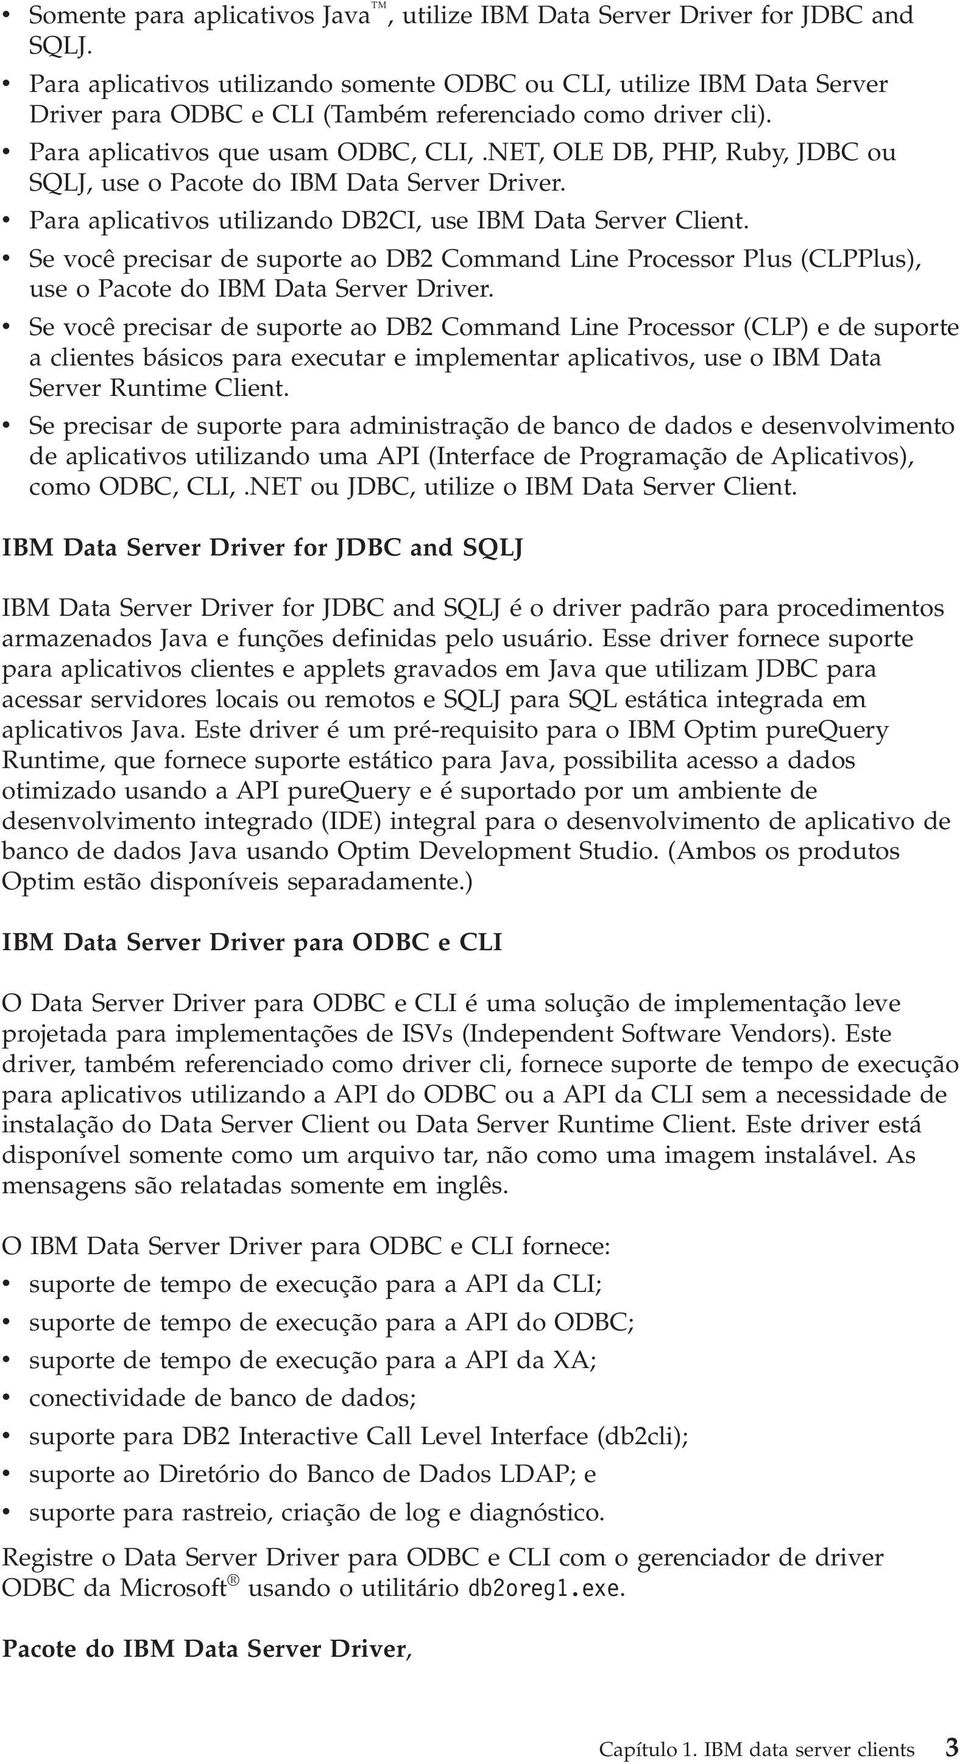 NET, OLE DB, PHP, Ruby, JDBC ou SQLJ, use o Pacote do IBM Data Serer Drier. Para aplicatios utilizando DB2CI, use IBM Data Serer Client.